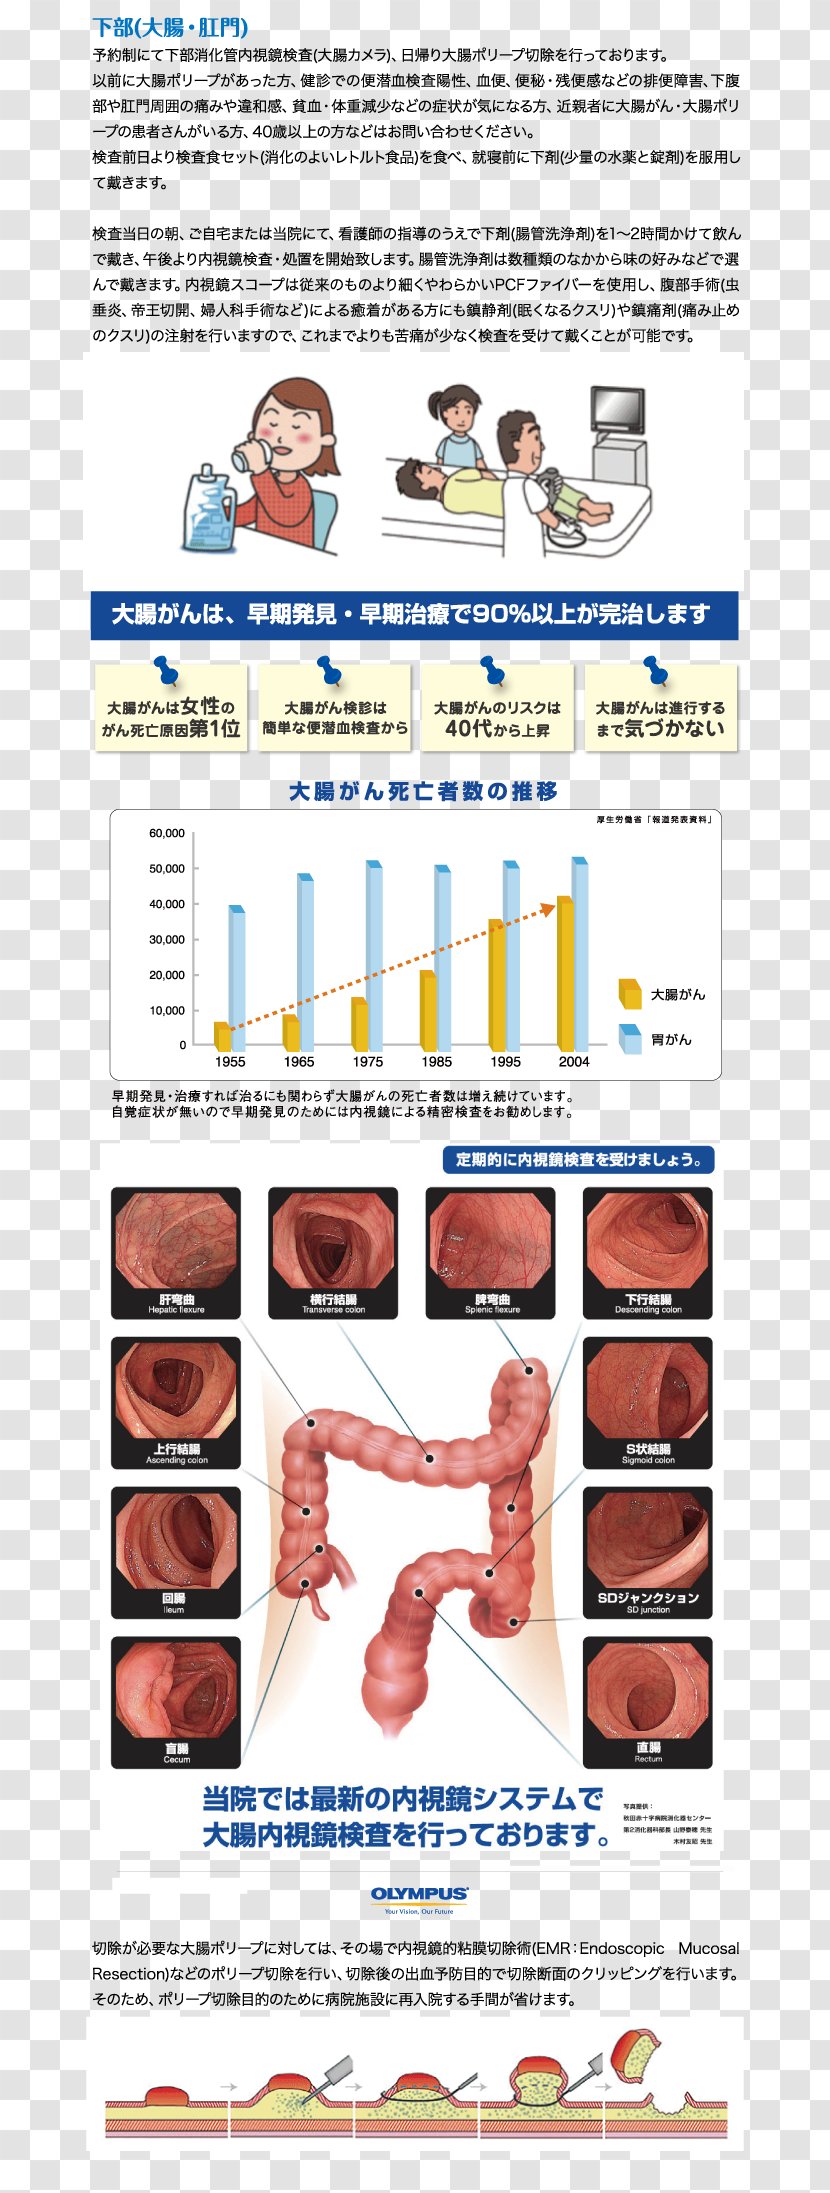 Chigasaki Endoscopy Internal Medicine Gastroenterology Shoe - Equipment Transparent PNG